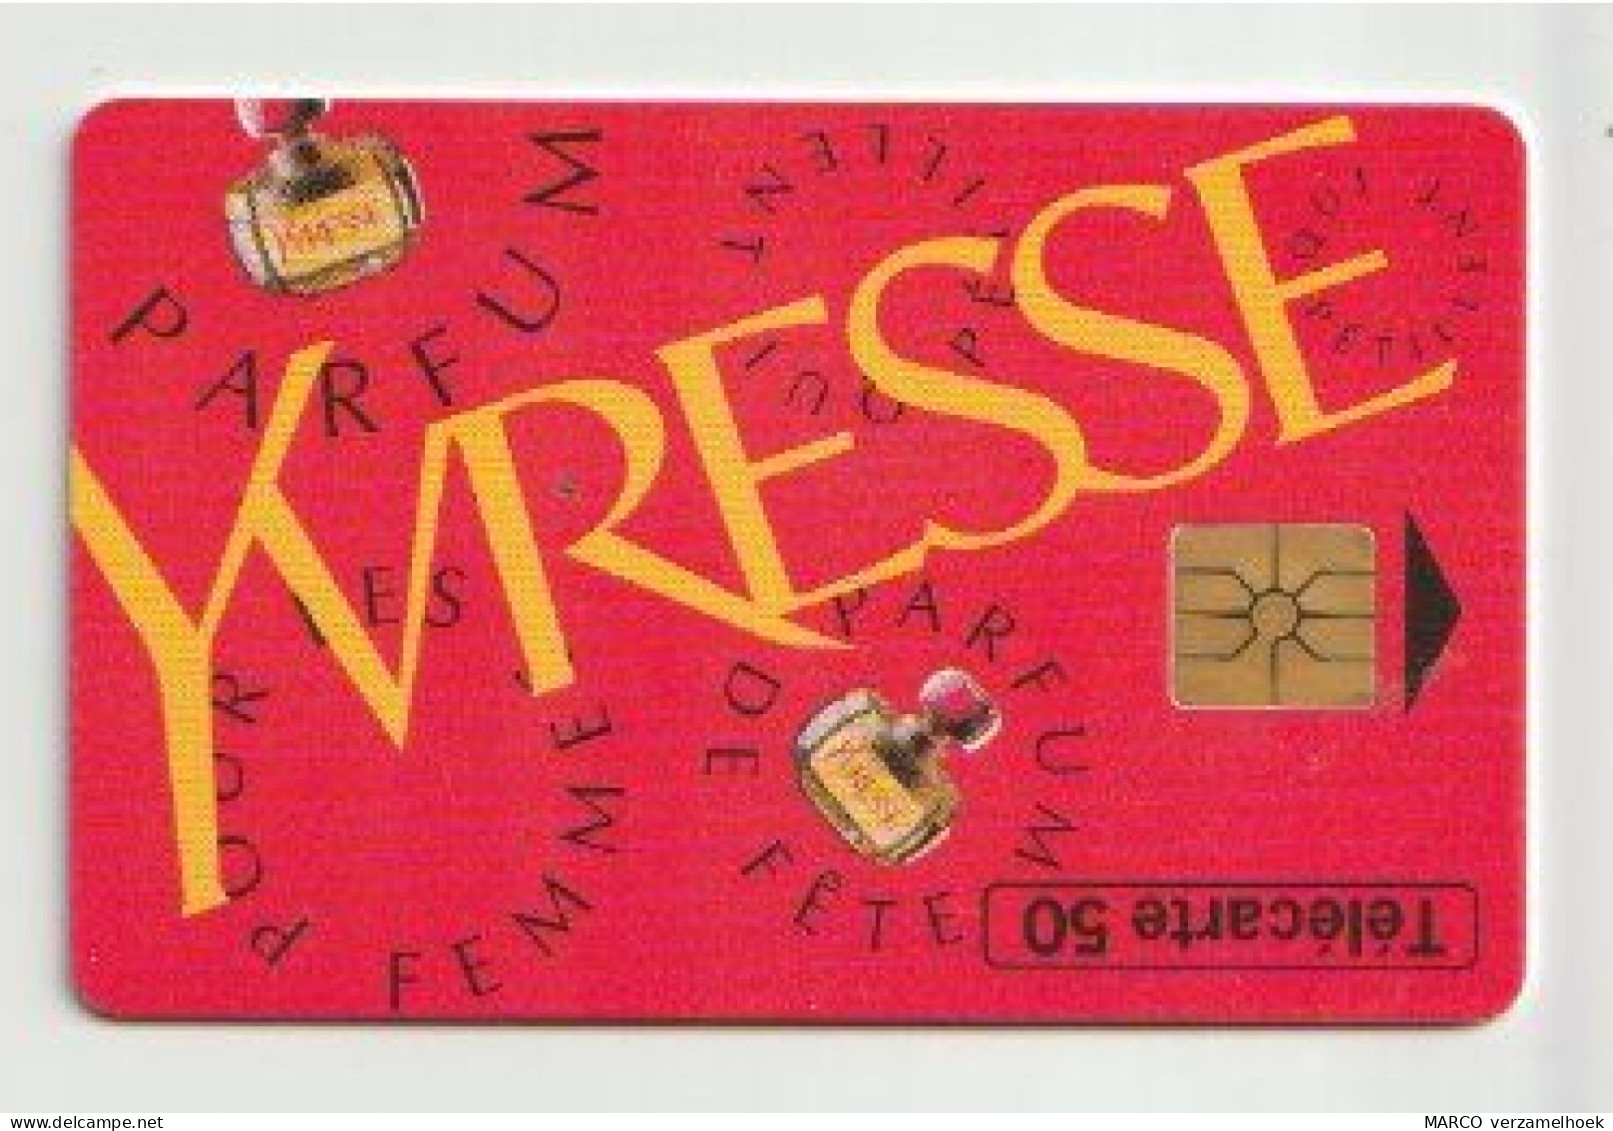 Telefoonkaart-télécarte France Telecom Frankrijk (F) 1996 Yvresse Parfum Yves Saint Laurent - 1999